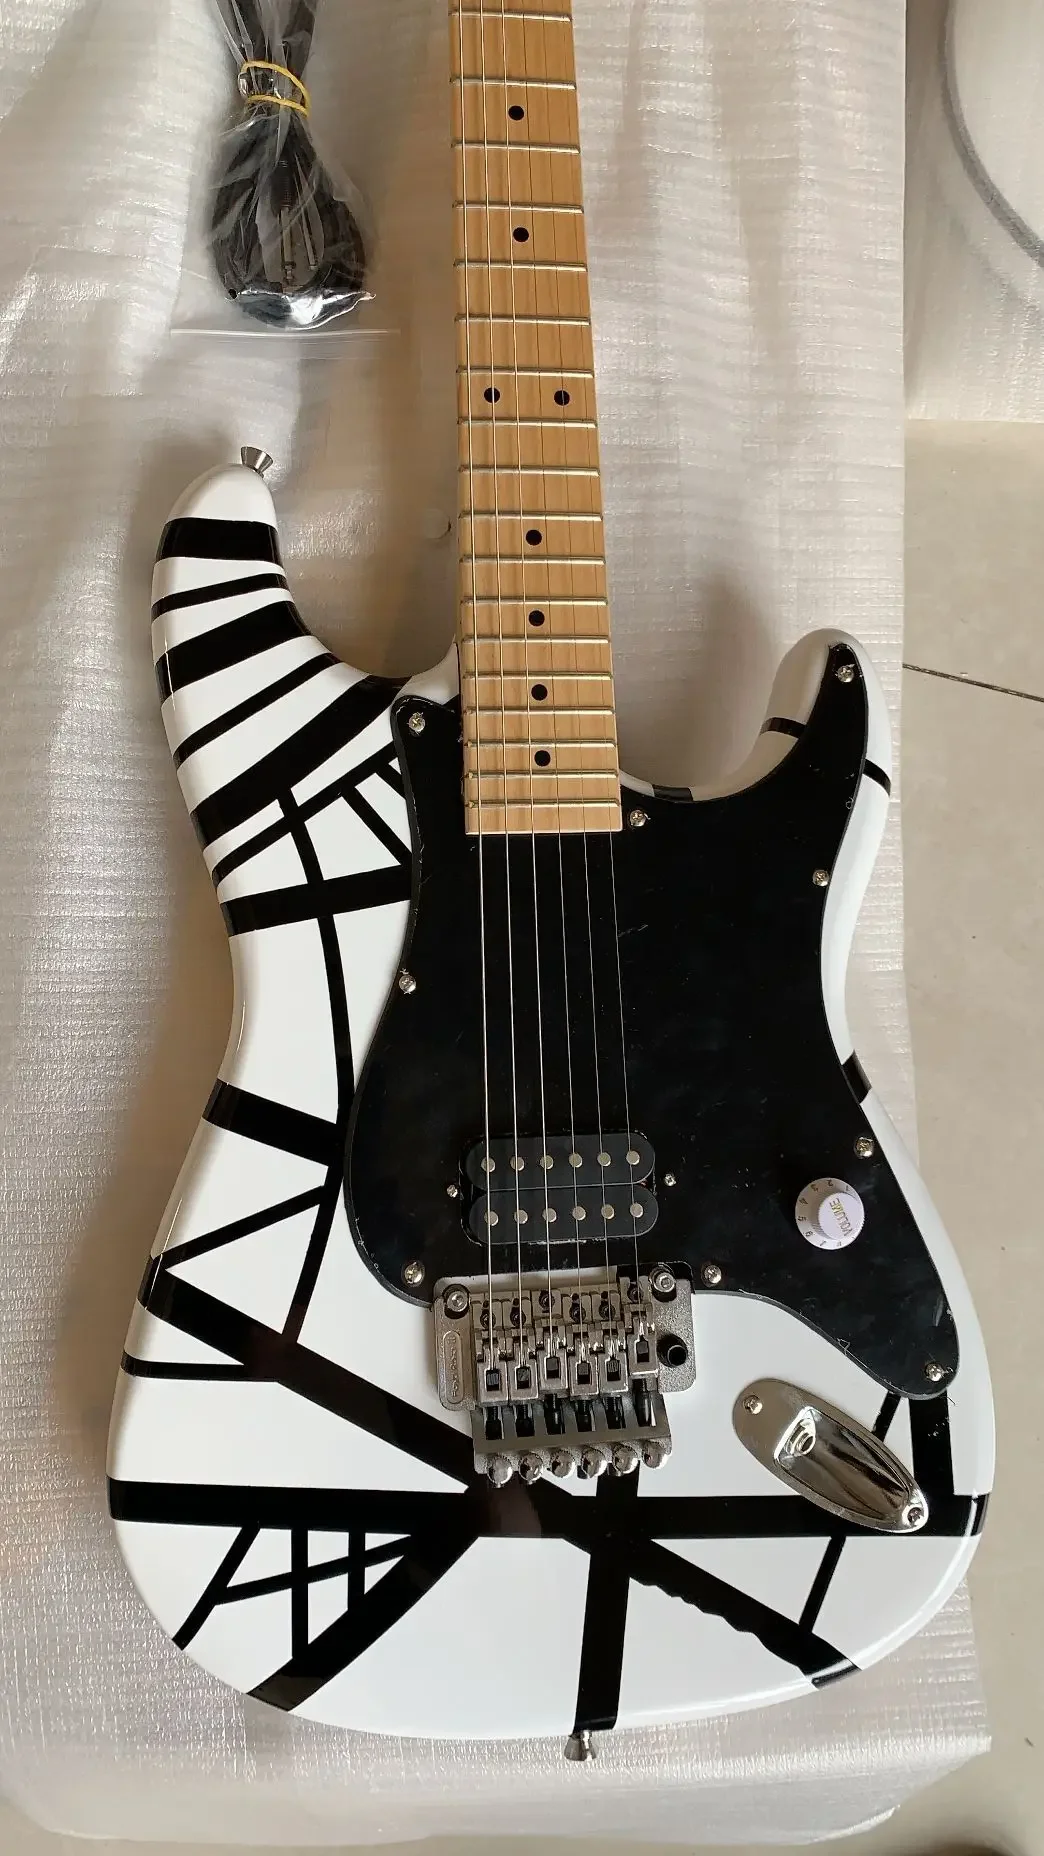 

Kra Eddie Van Halen 5150 White Black Stripe Electric Guitar Floyd Rose Tremolo Bridge, Locking Nut, Maple Neck & Fingerboard